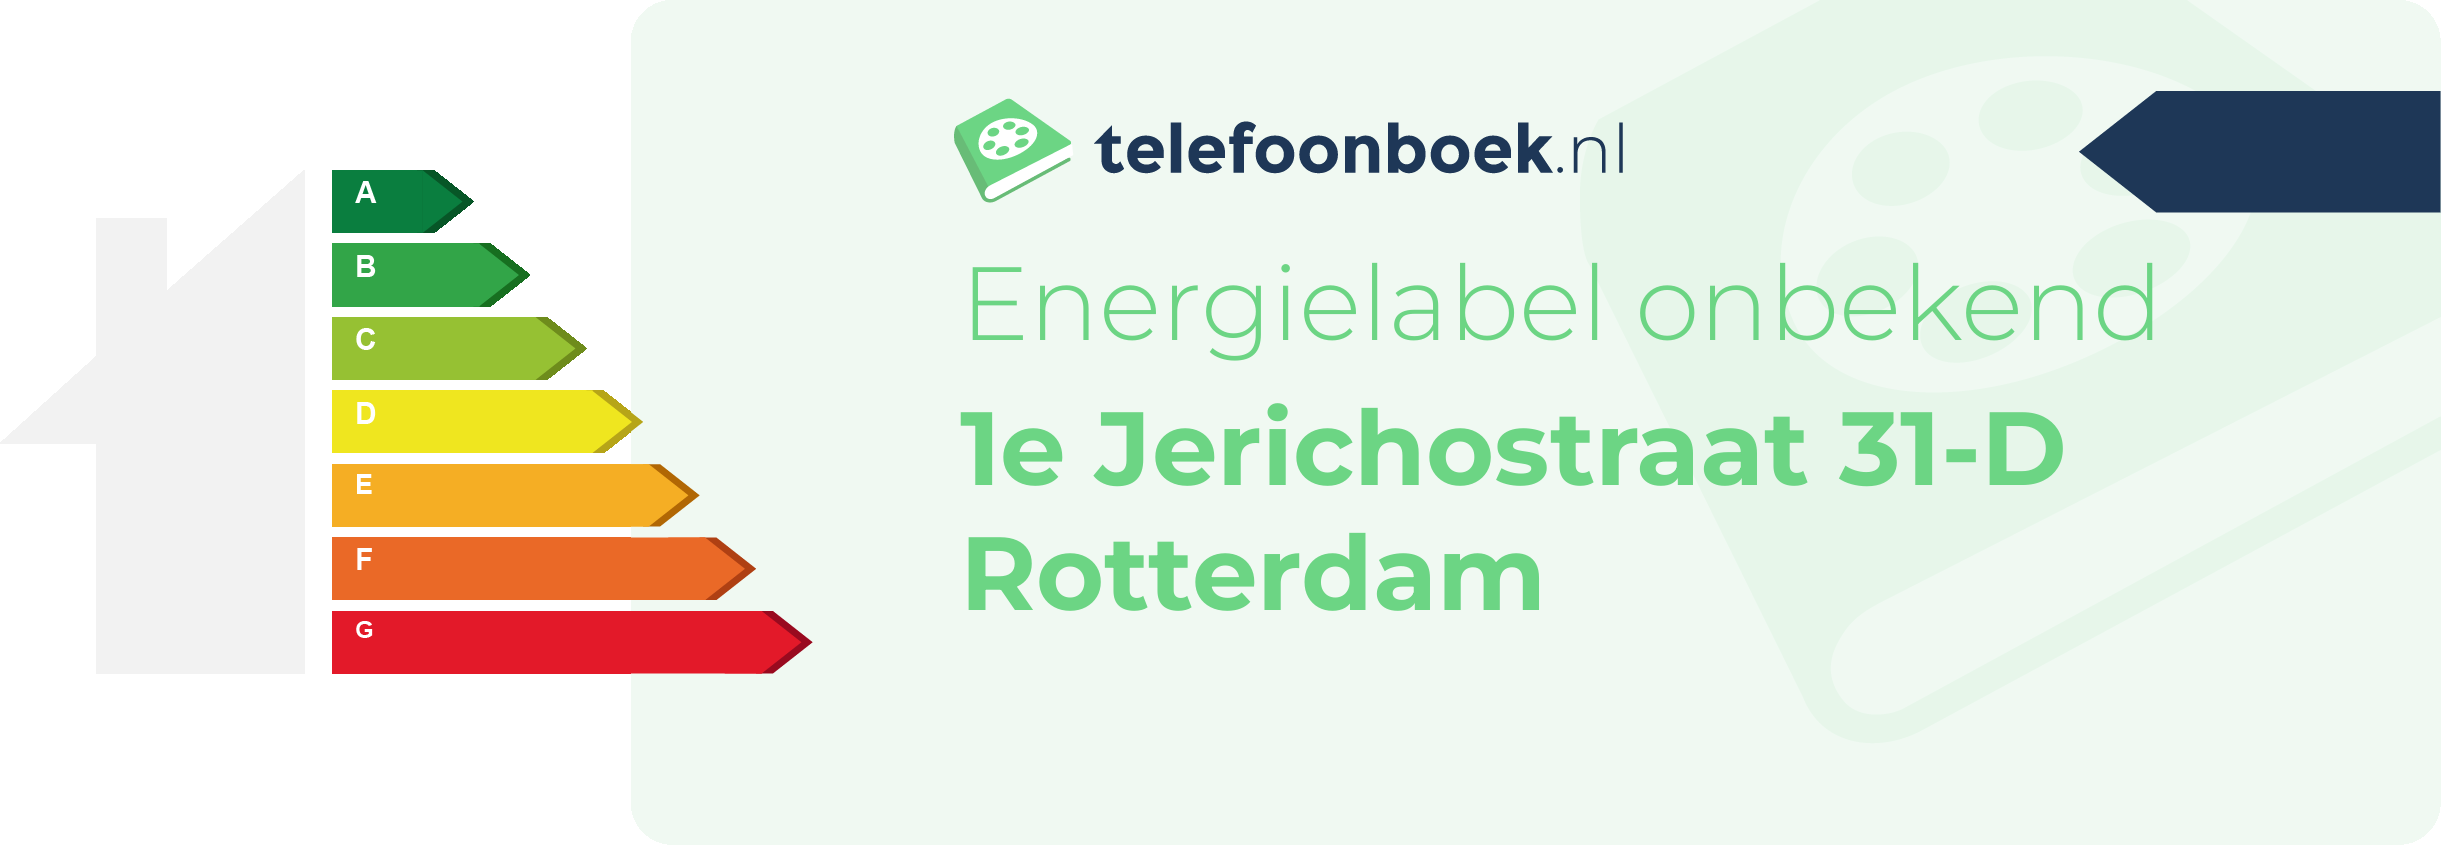 Energielabel 1e Jerichostraat 31-D Rotterdam